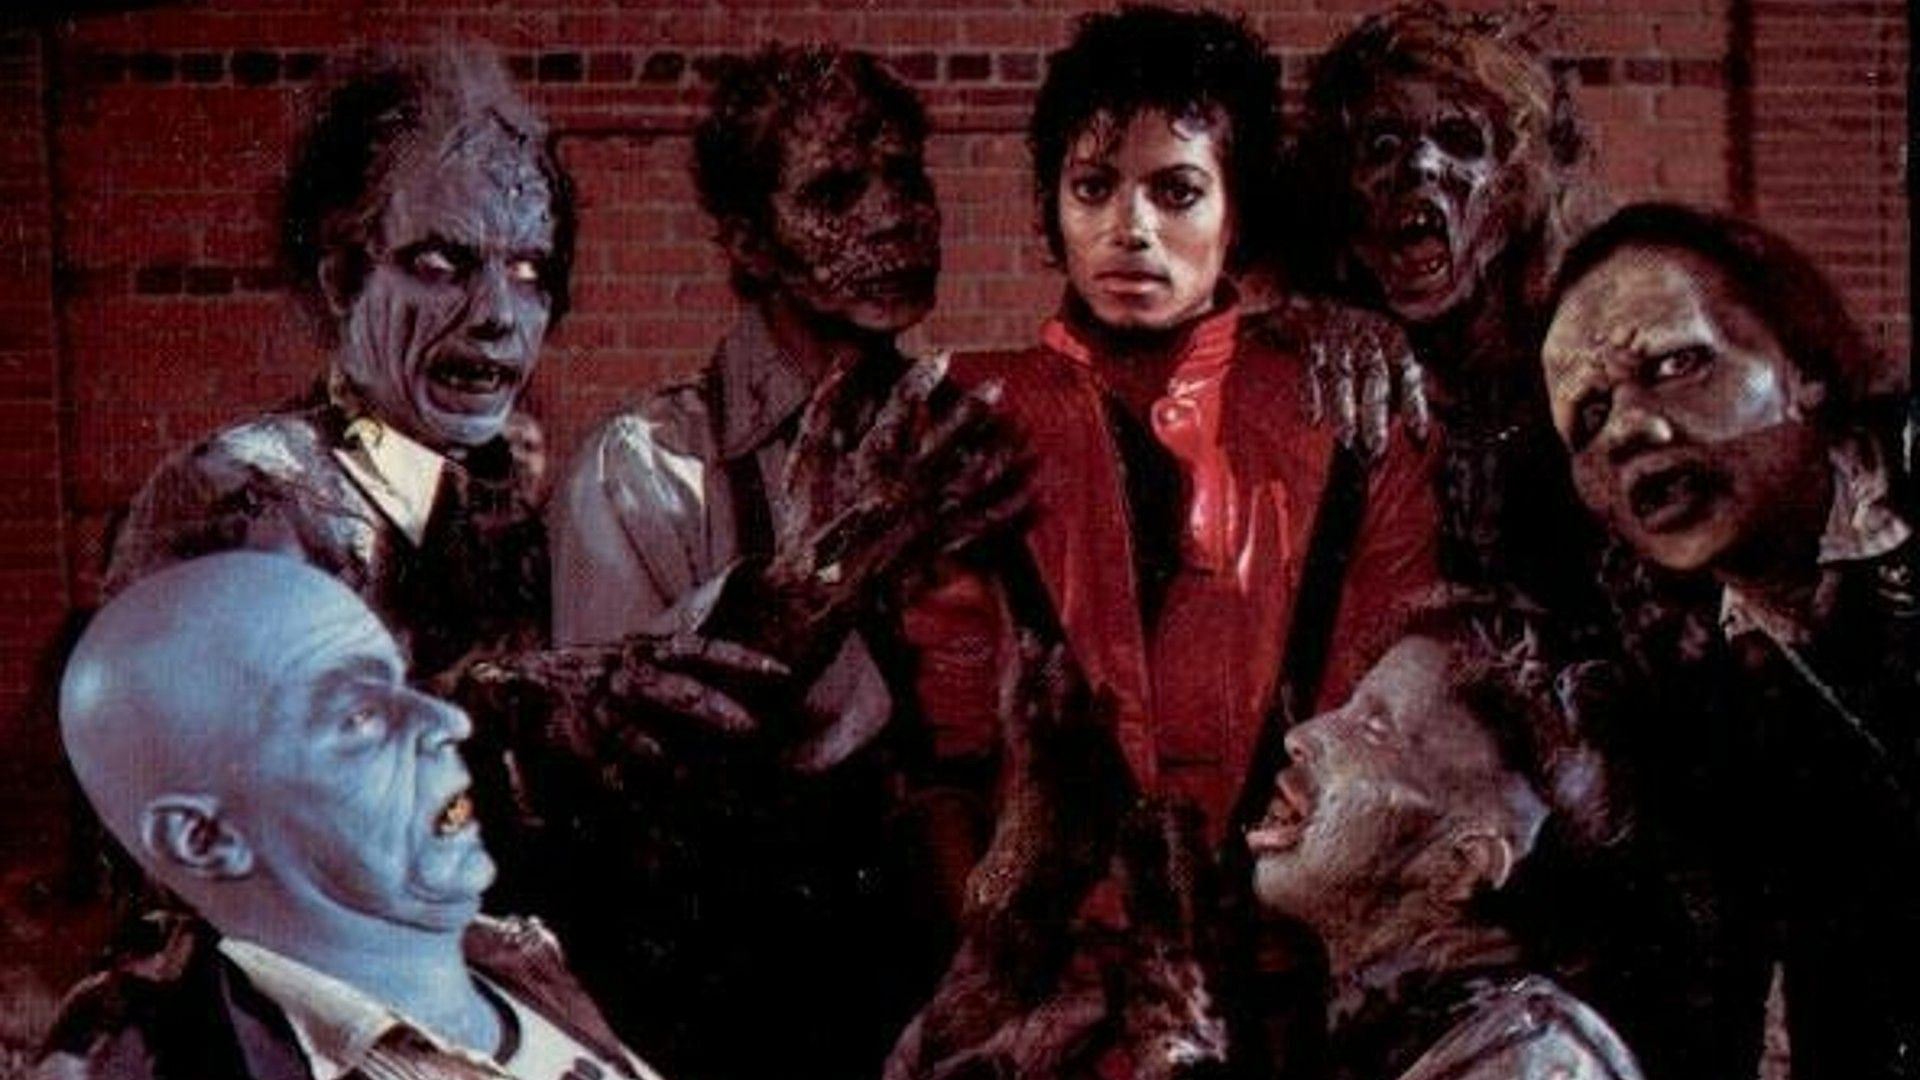 The pop star in Thriller music video (Image via IMDb)